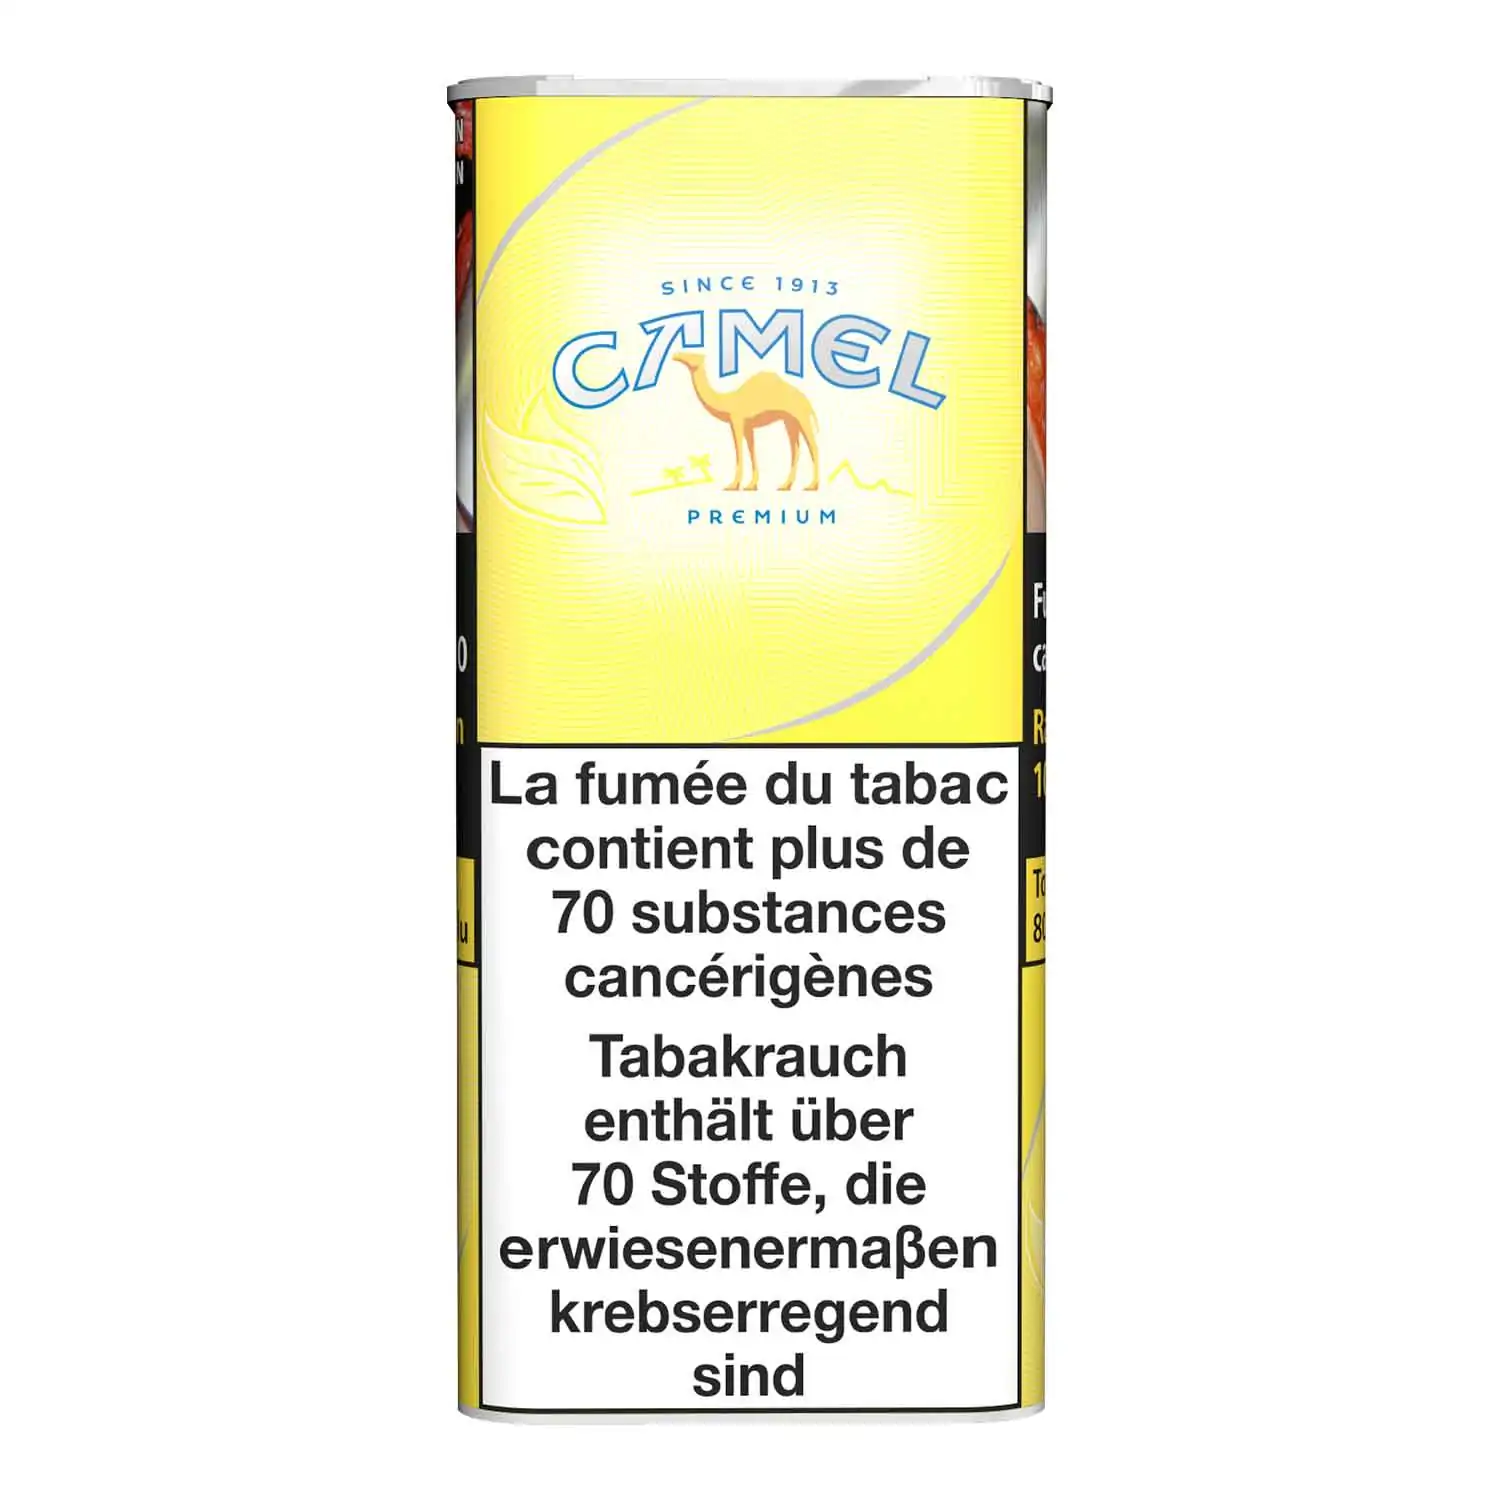 Camel premium yellow 300g - Buy at Real Tobacco